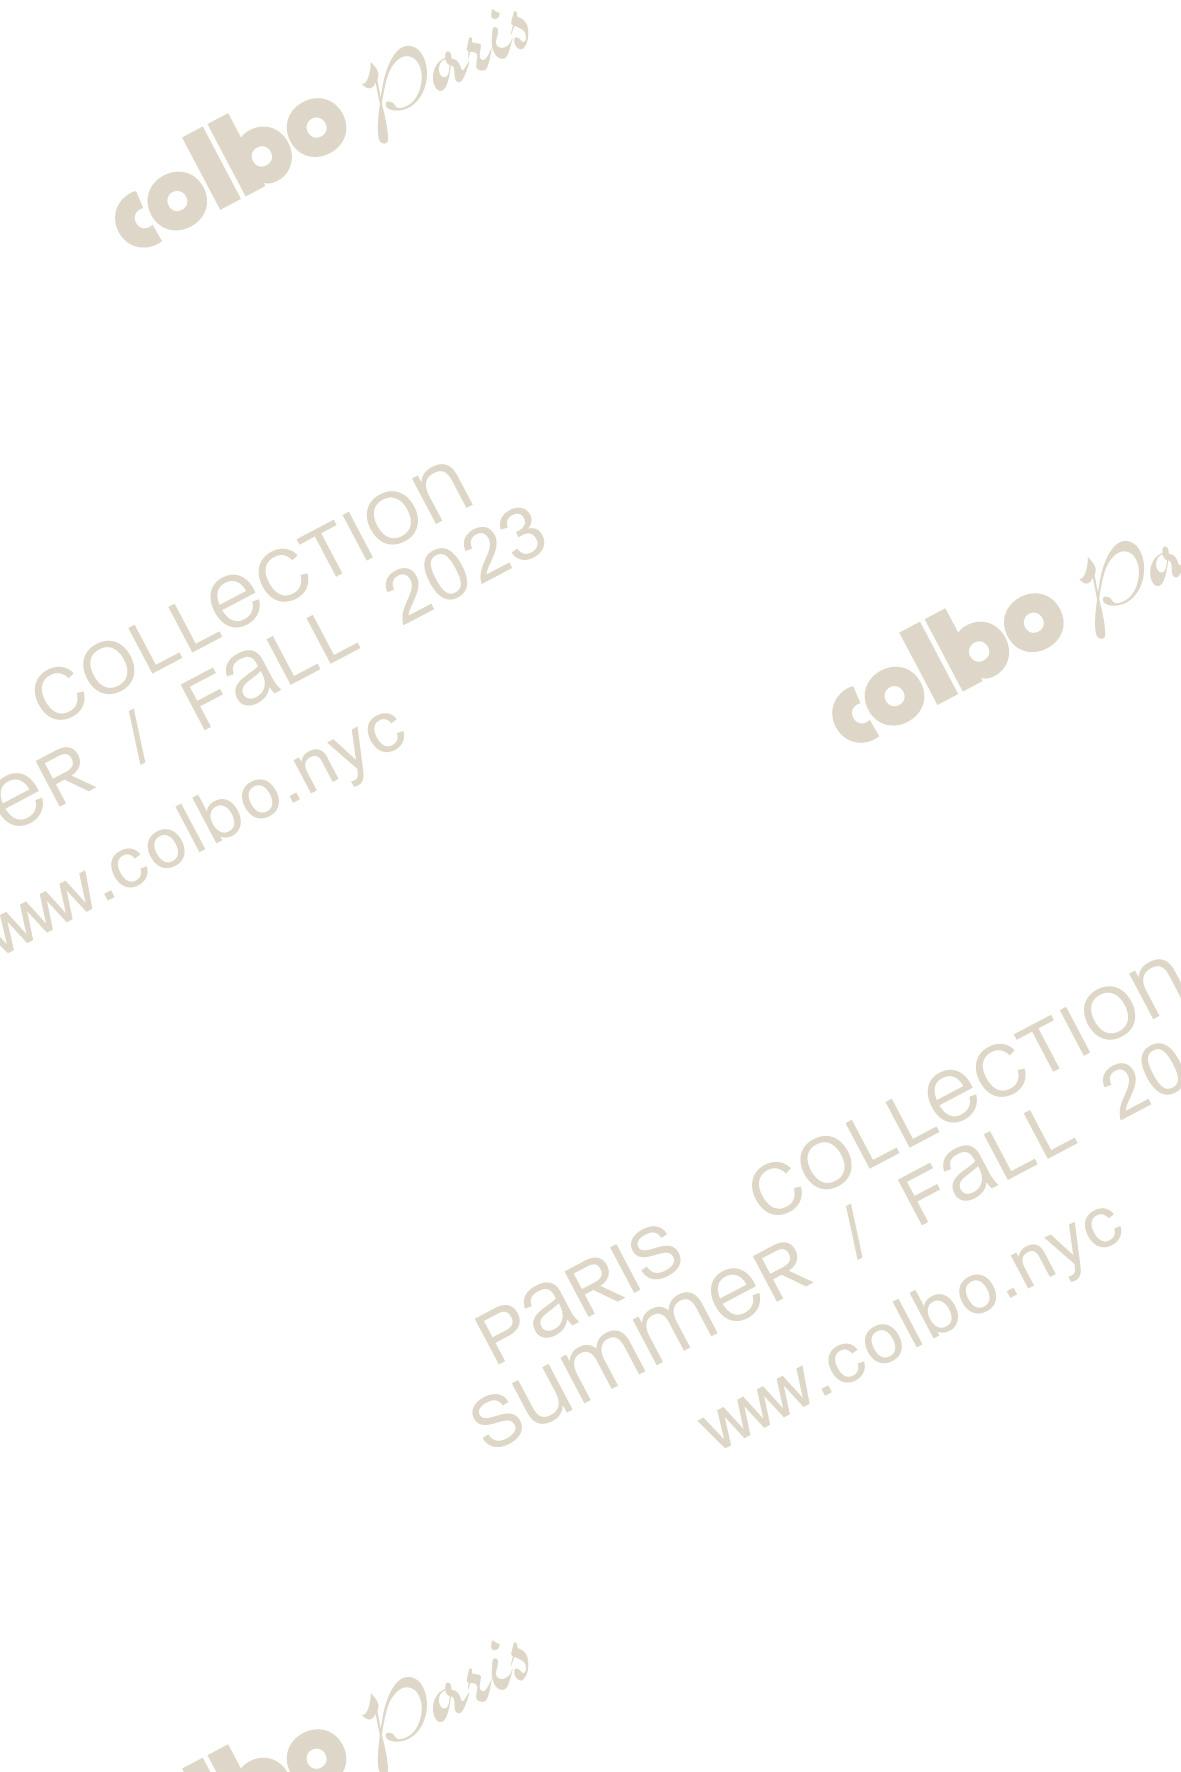 Colbo - Visual Identity